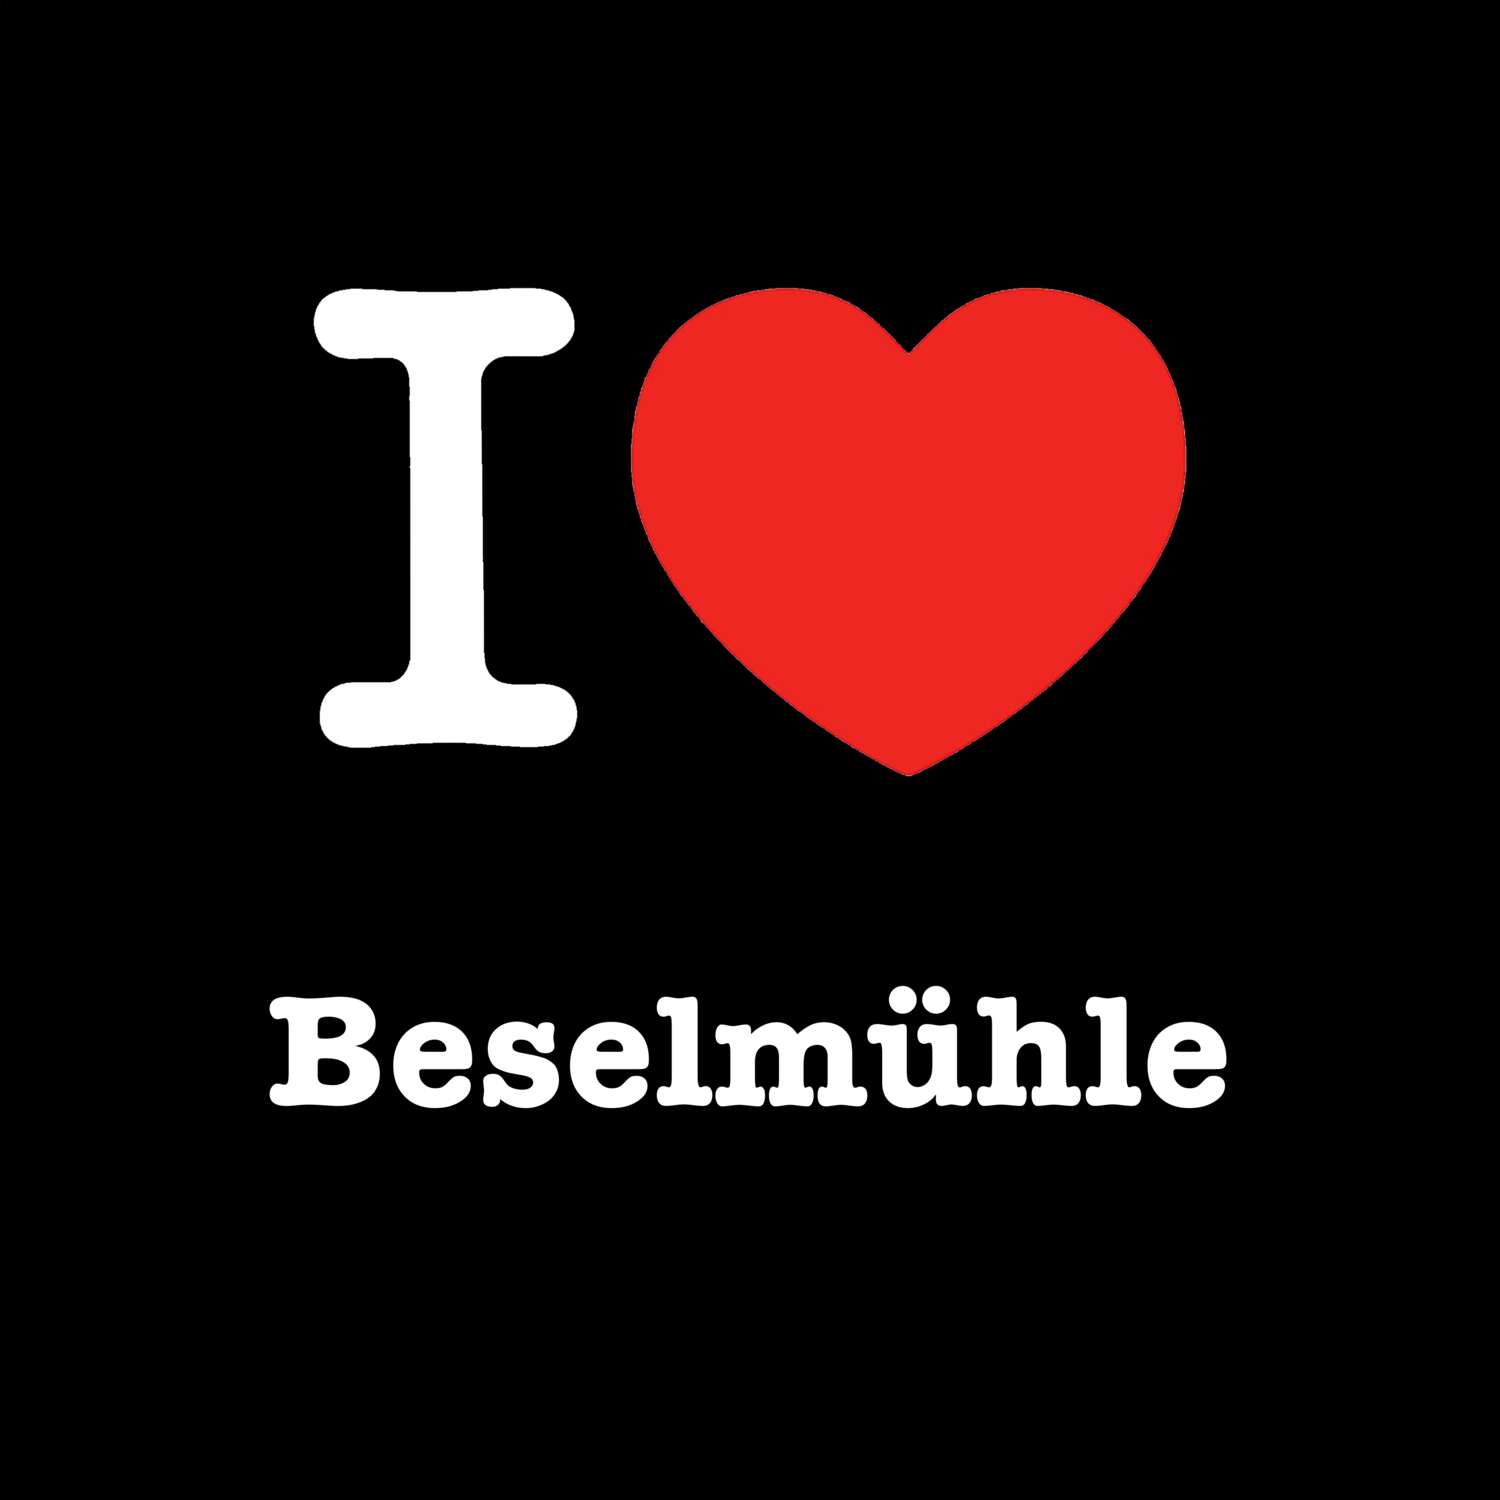 Beselmühle T-Shirt »I love«